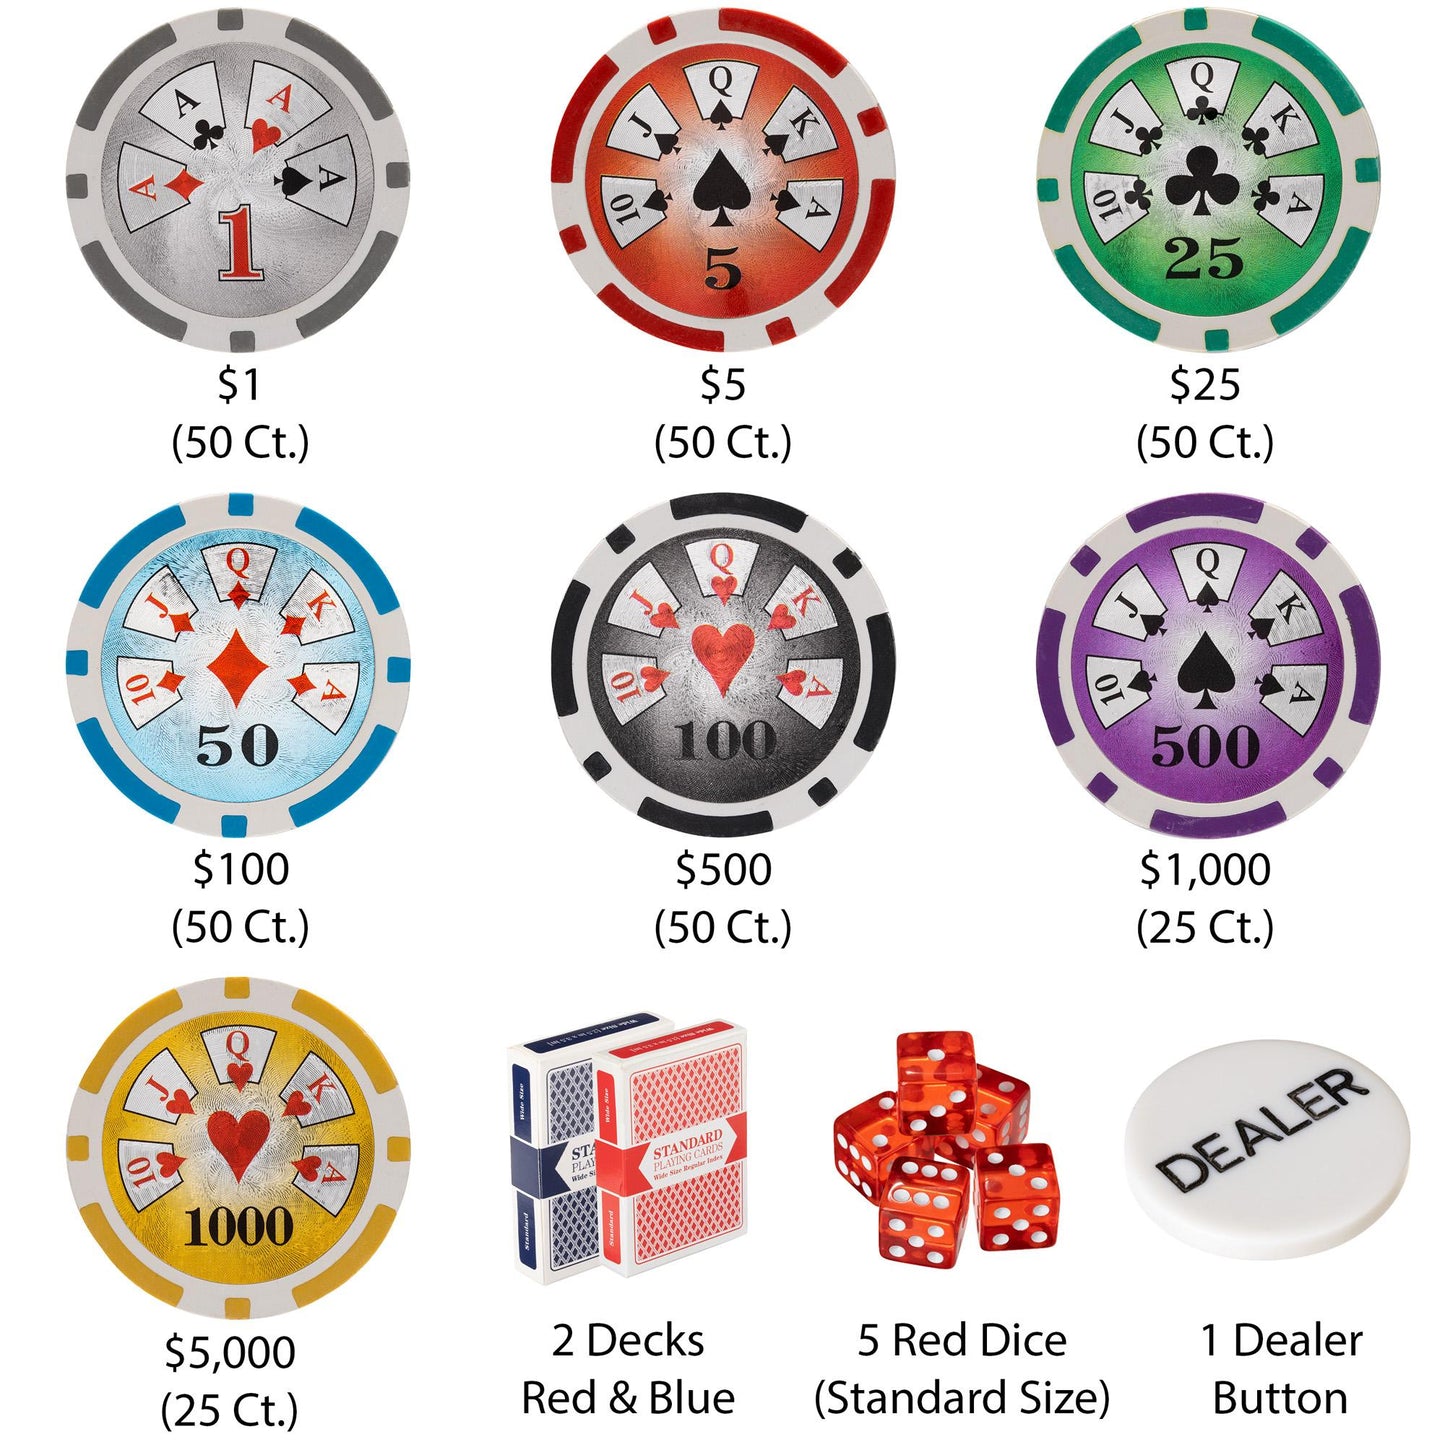 300 Hi Roller Poker Chips with Aluminum Case